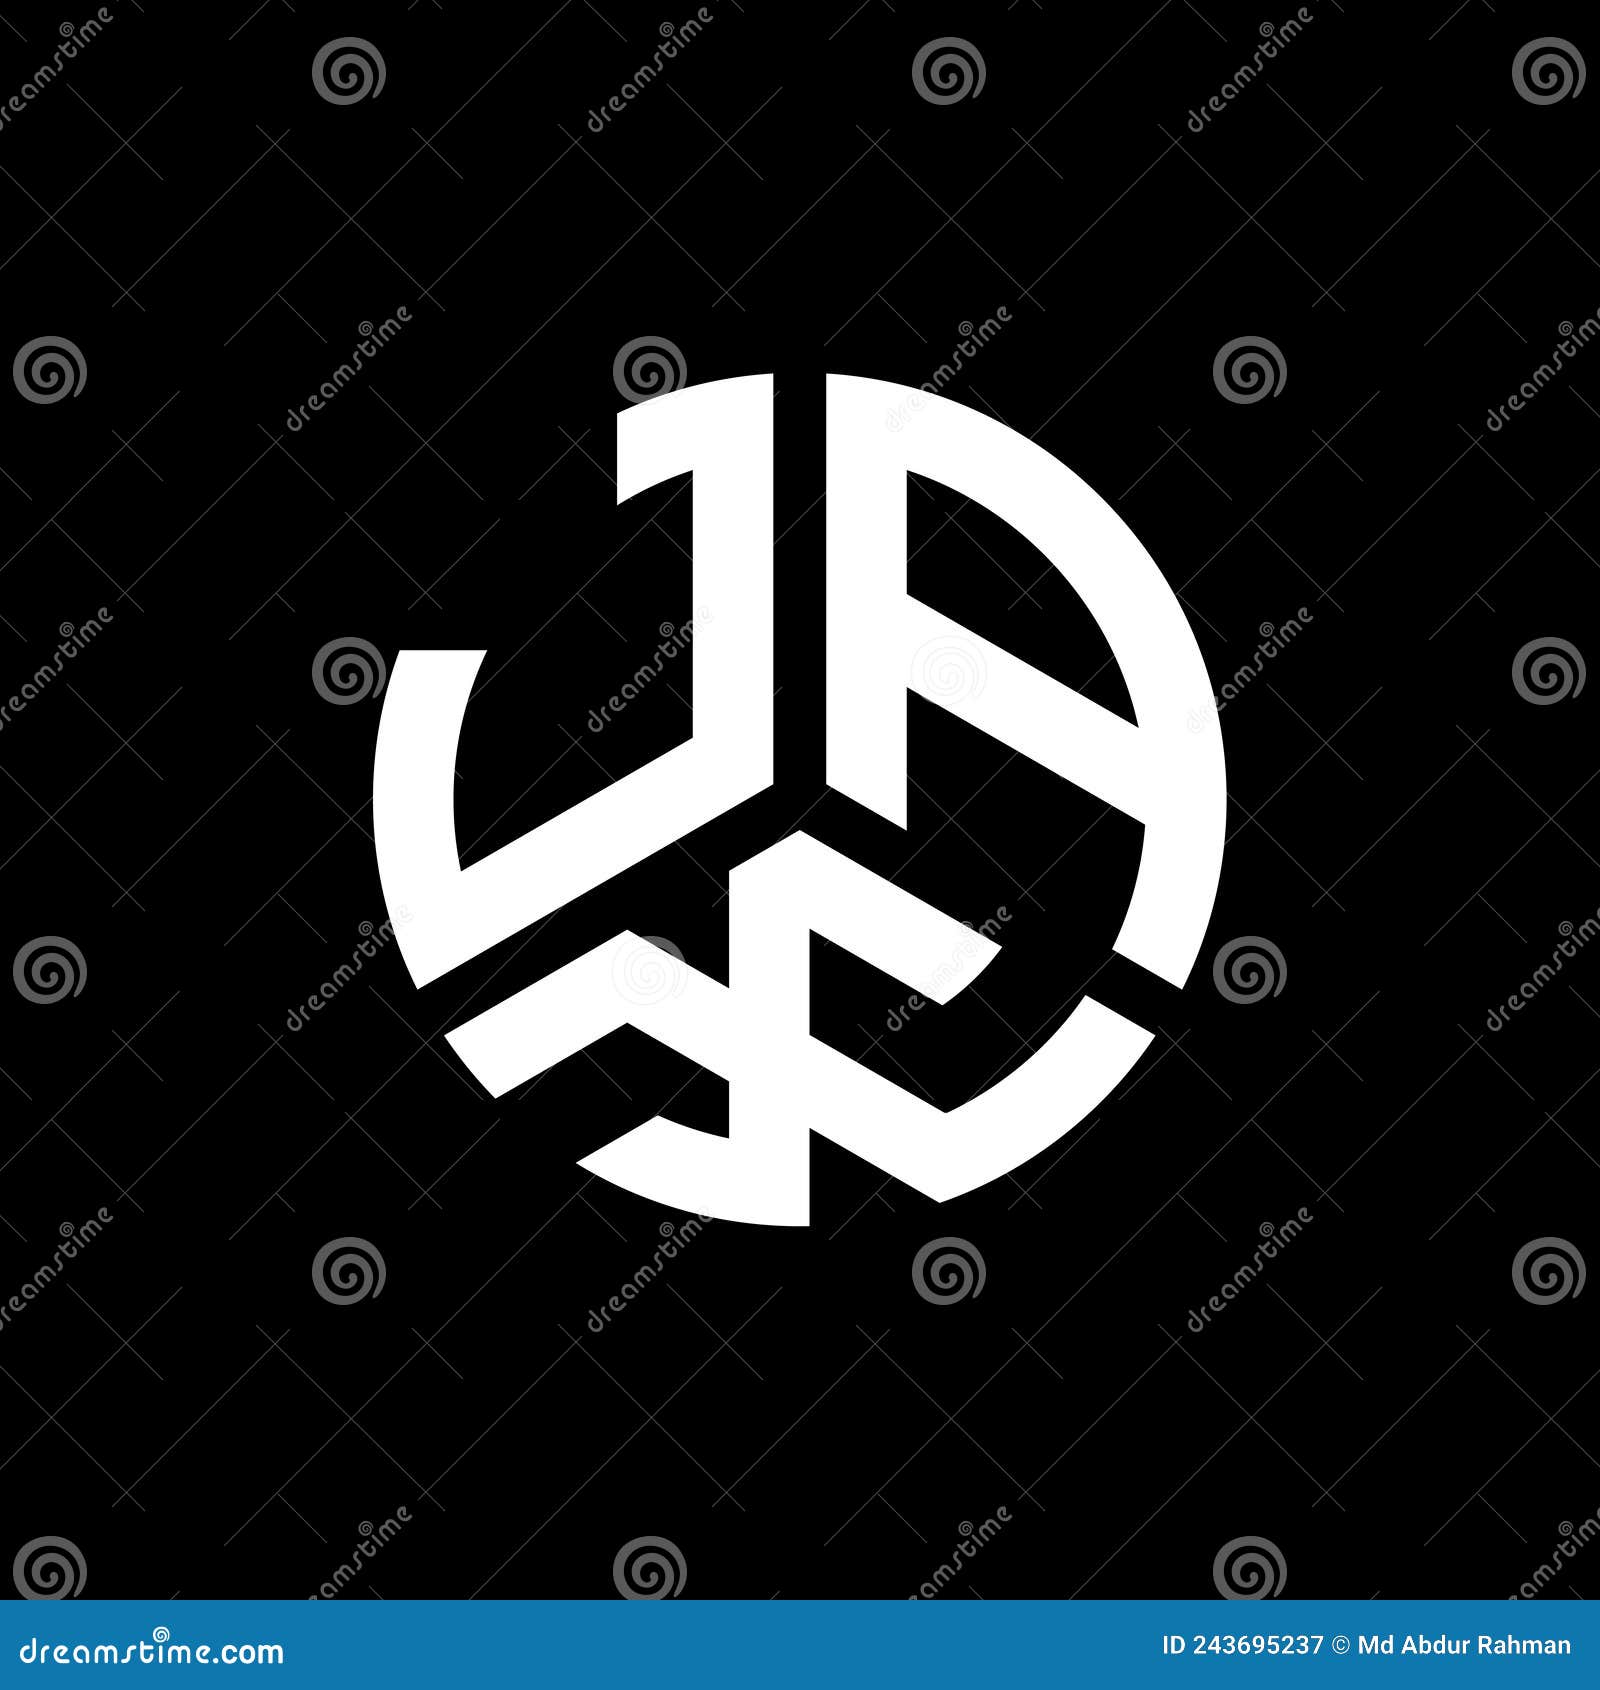 jax letter logo  on white background. jax creative initials letter logo concept. jax letter 